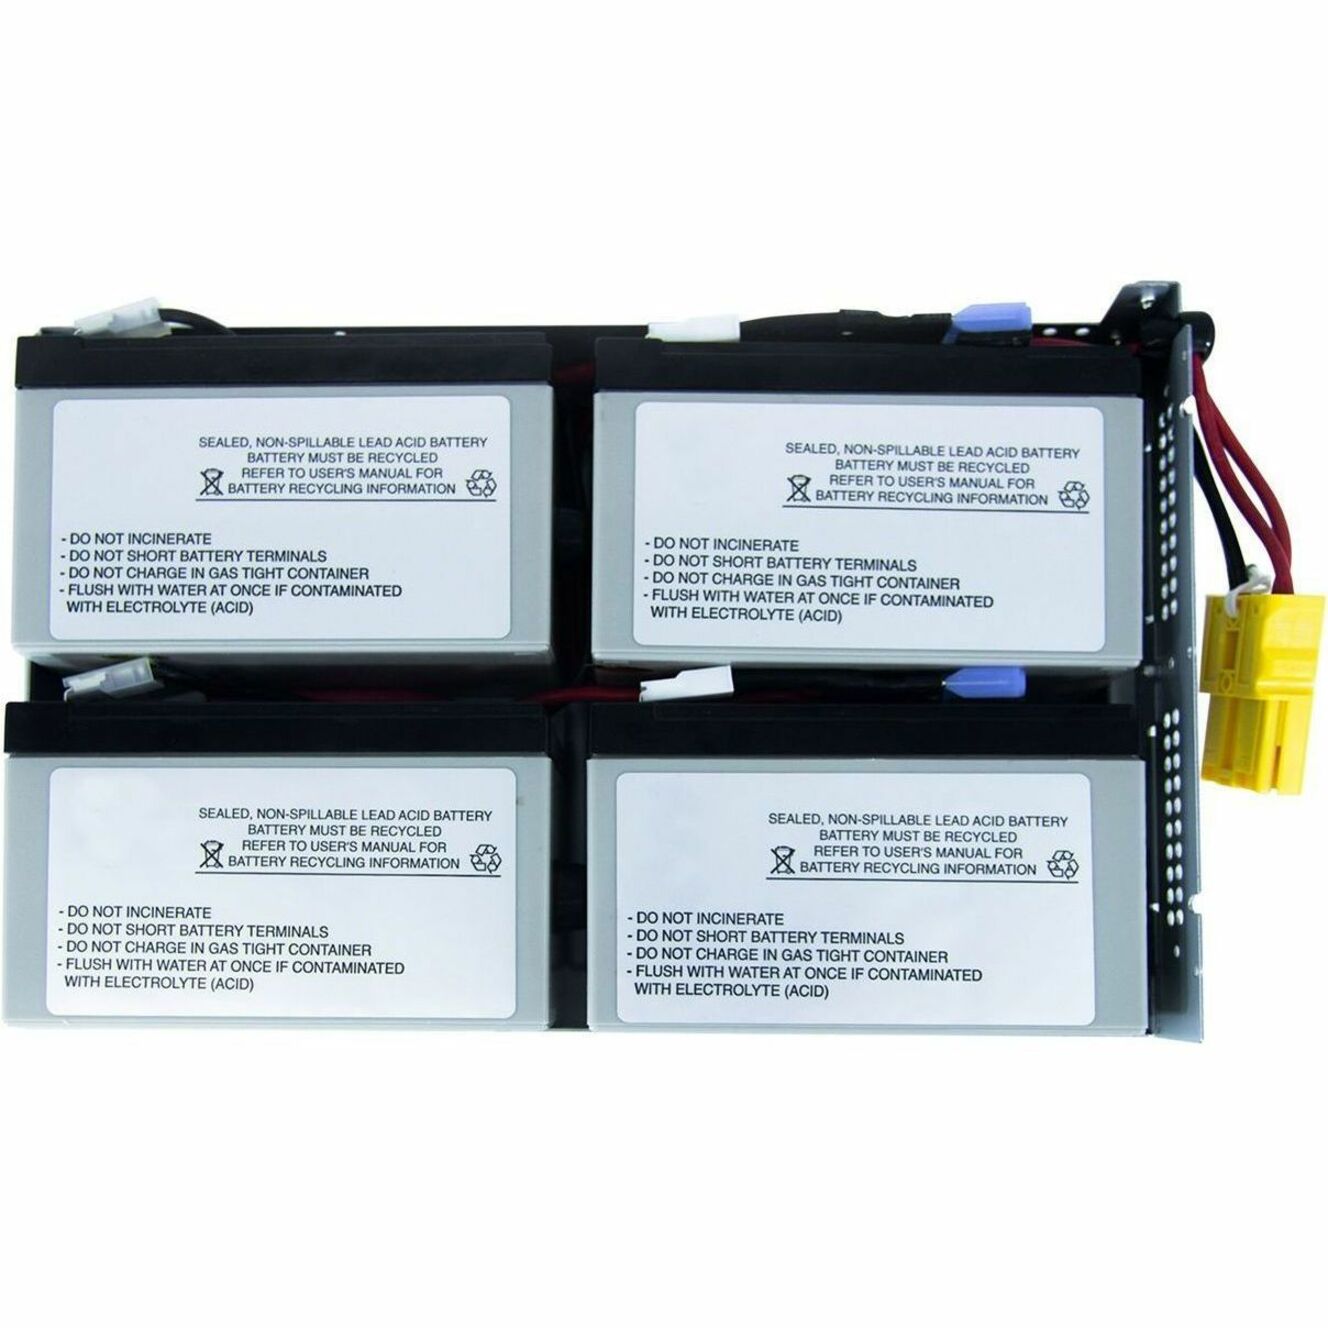 V7 APCRBC159-V7 UPS Battery for APCRBC159, 18 Month Limited Warranty, 432 VAh Battery Energy